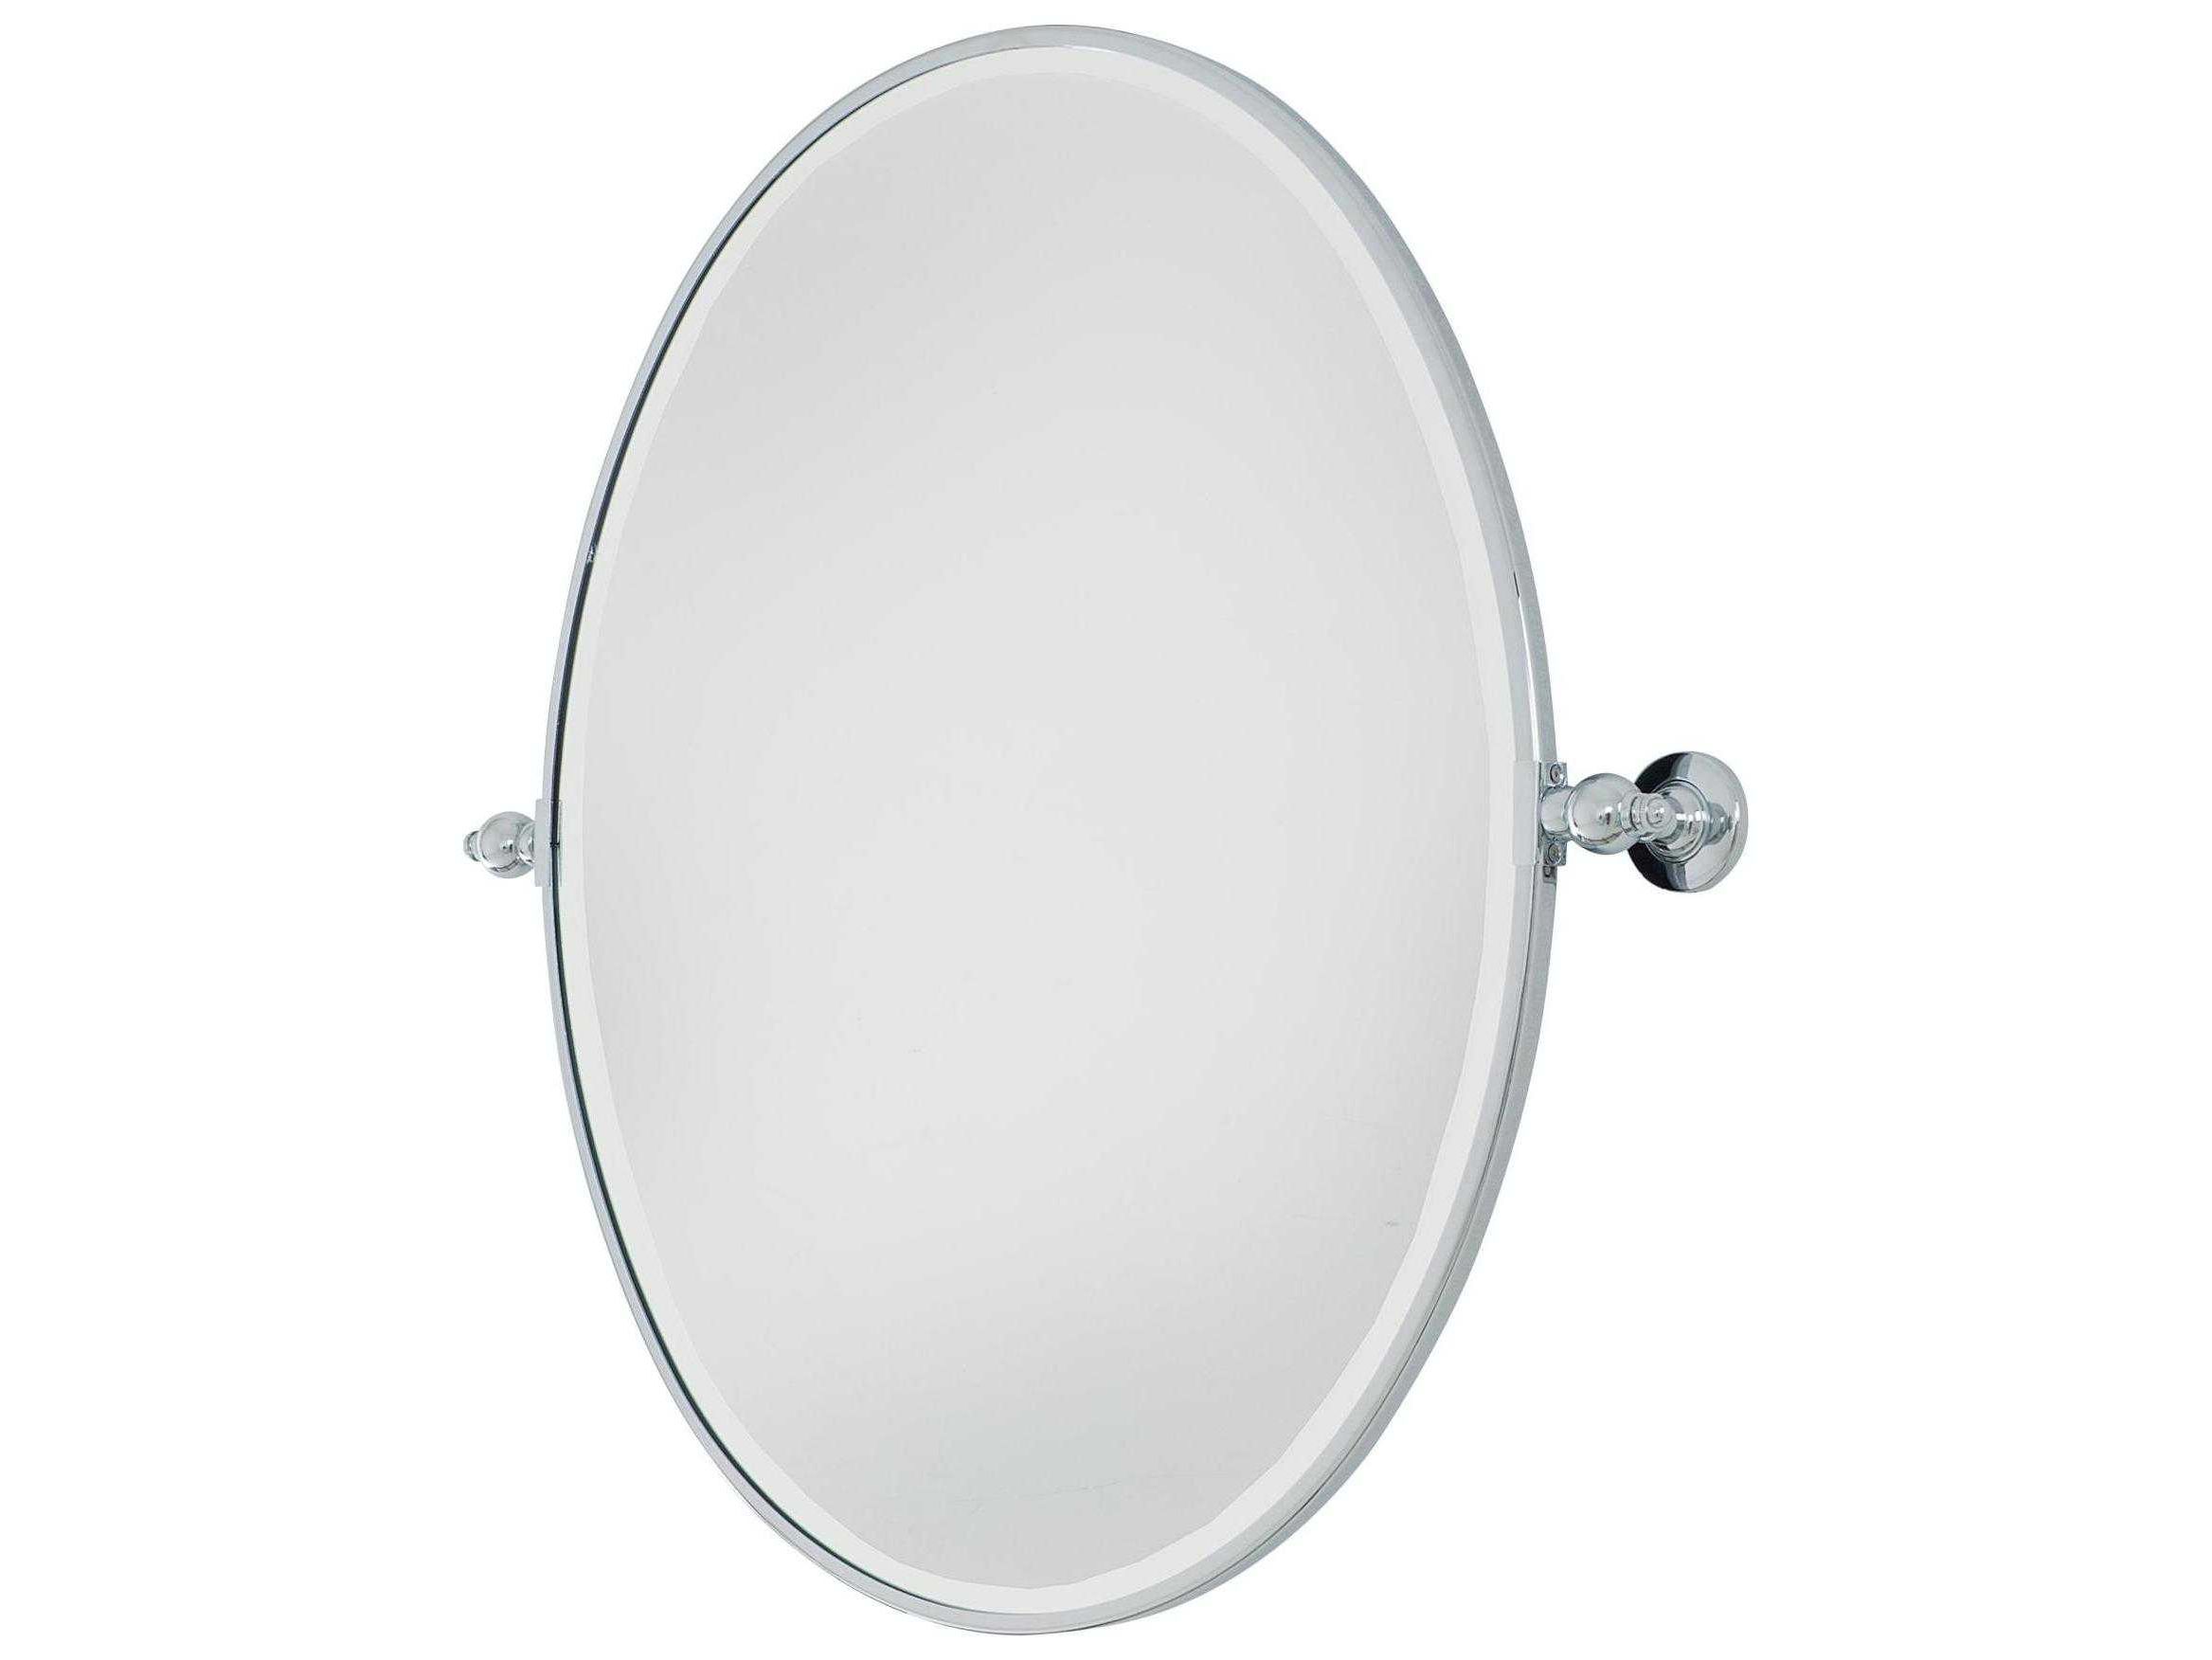 Minka Lavery Pivoting Chrome Wall Mirror Regarding Best And Newest Pivoting Wall Mirror (View 16 of 20)